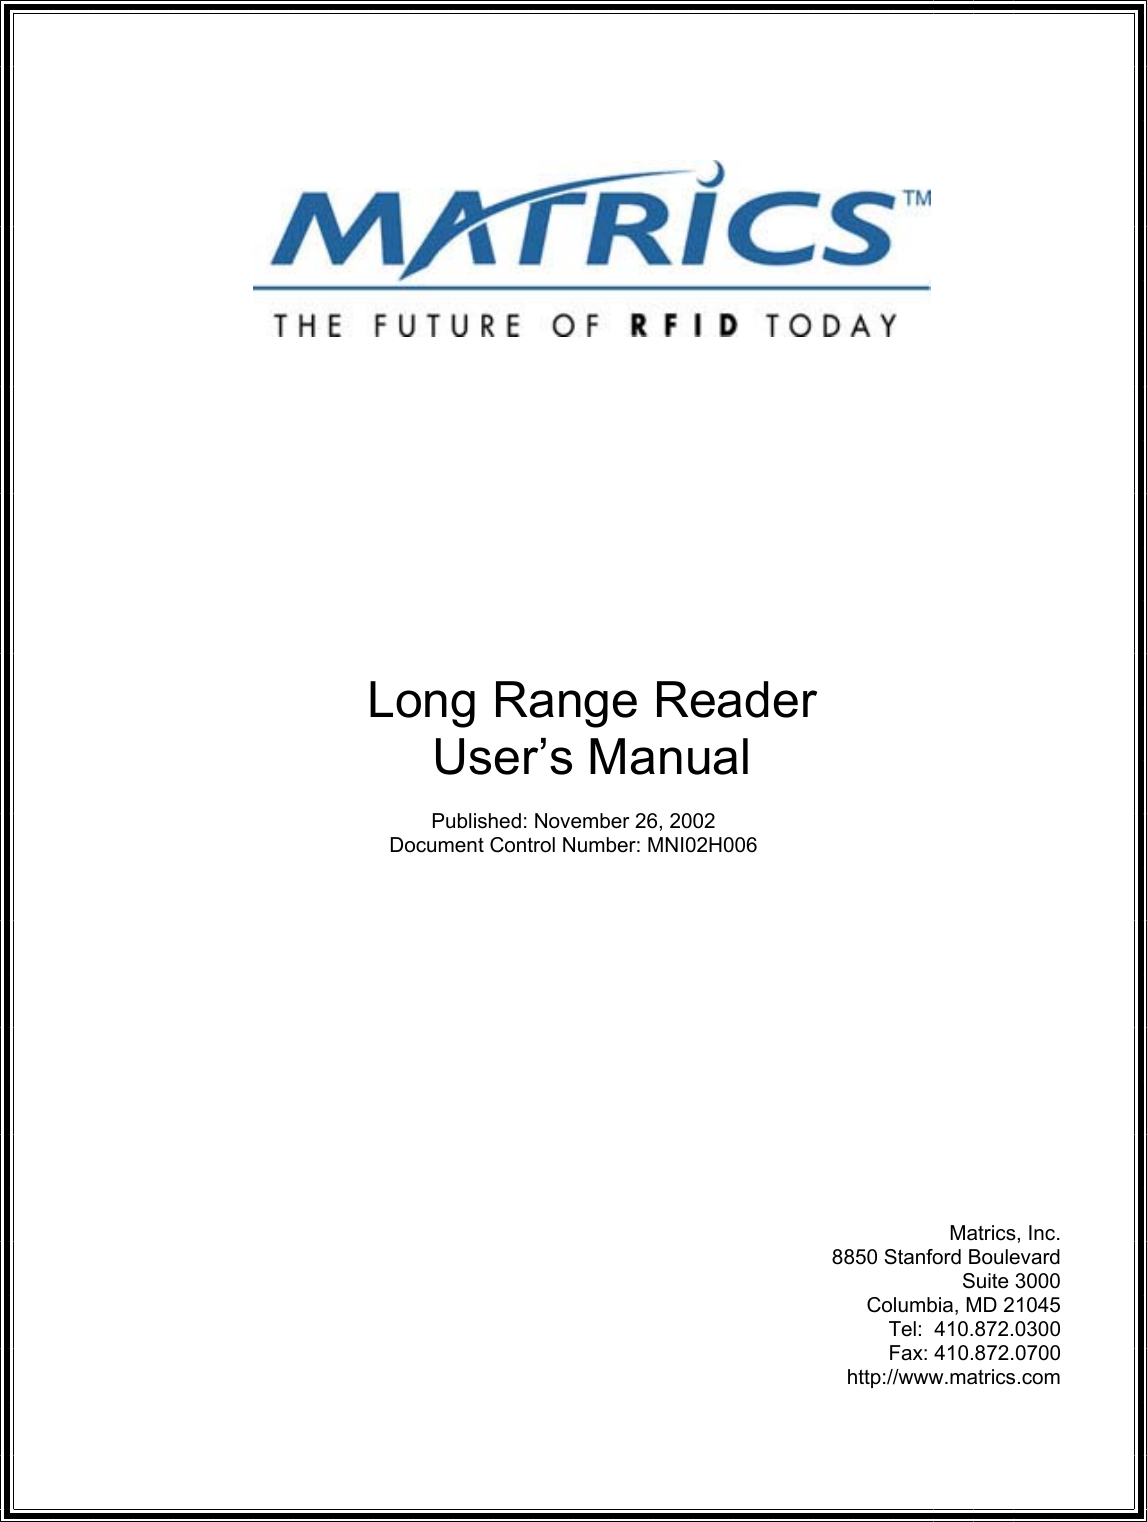              Long Range Reader User’s Manual  Published: November 26, 2002 Document Control Number: MNI02H006                Matrics, Inc. 8850 Stanford Boulevard Suite 3000 Columbia, MD 21045 Tel:  410.872.0300  Fax: 410.872.0700  http://www.matrics.com  